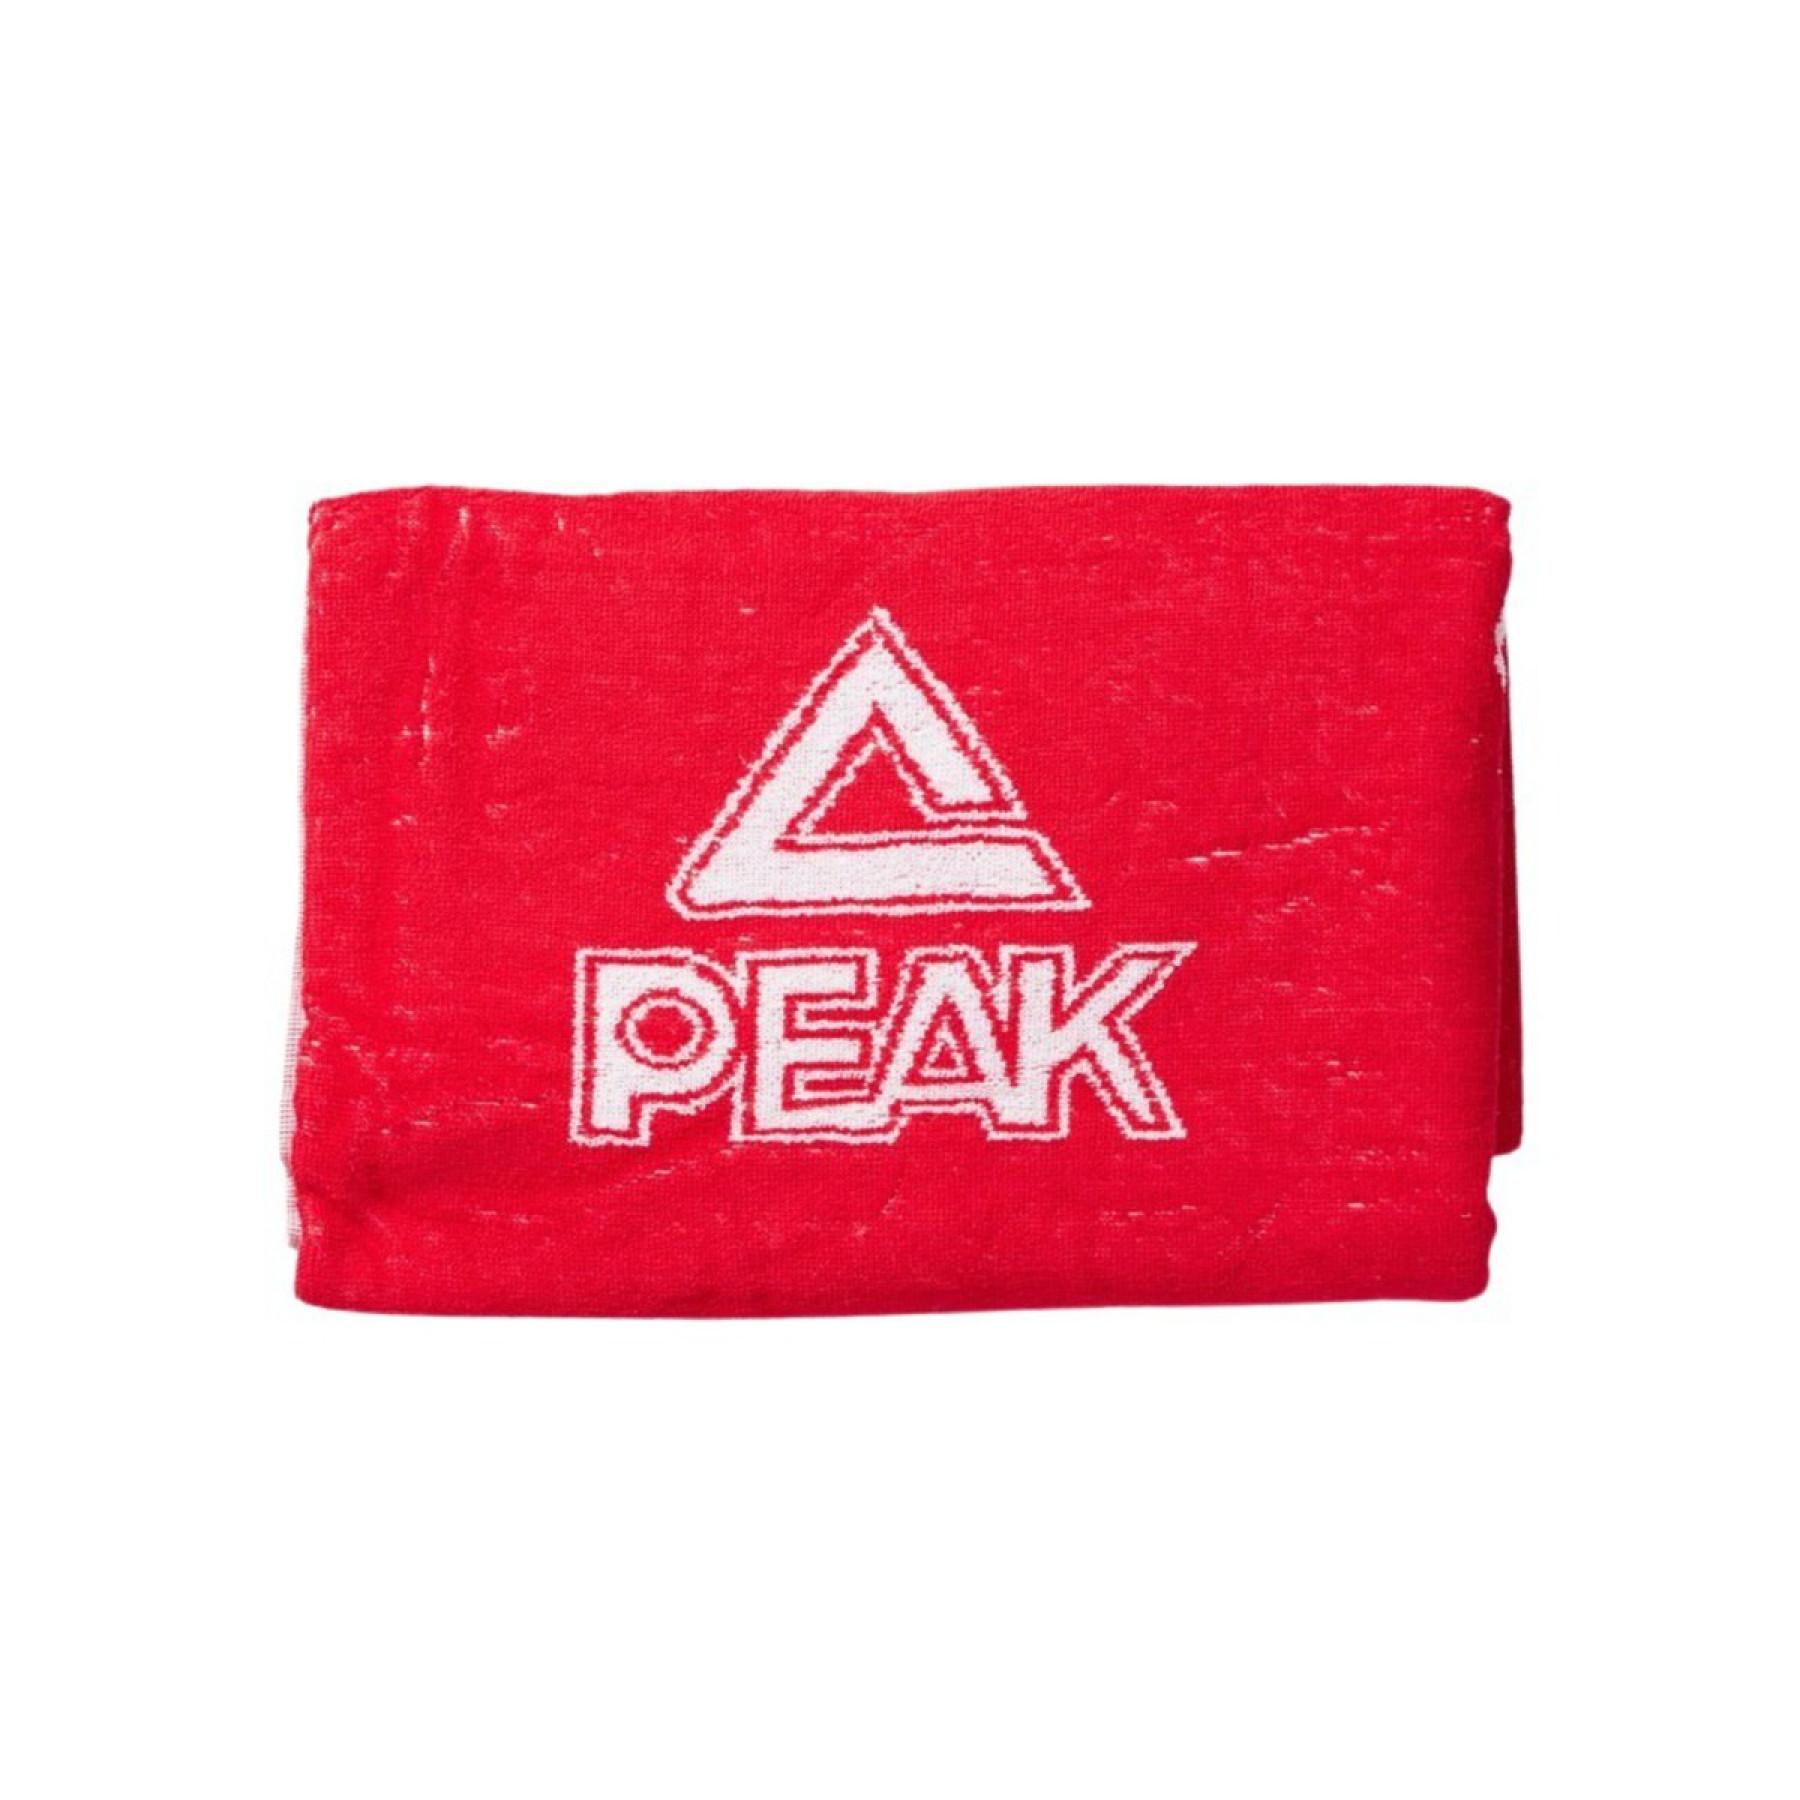 Towel Peak red & white